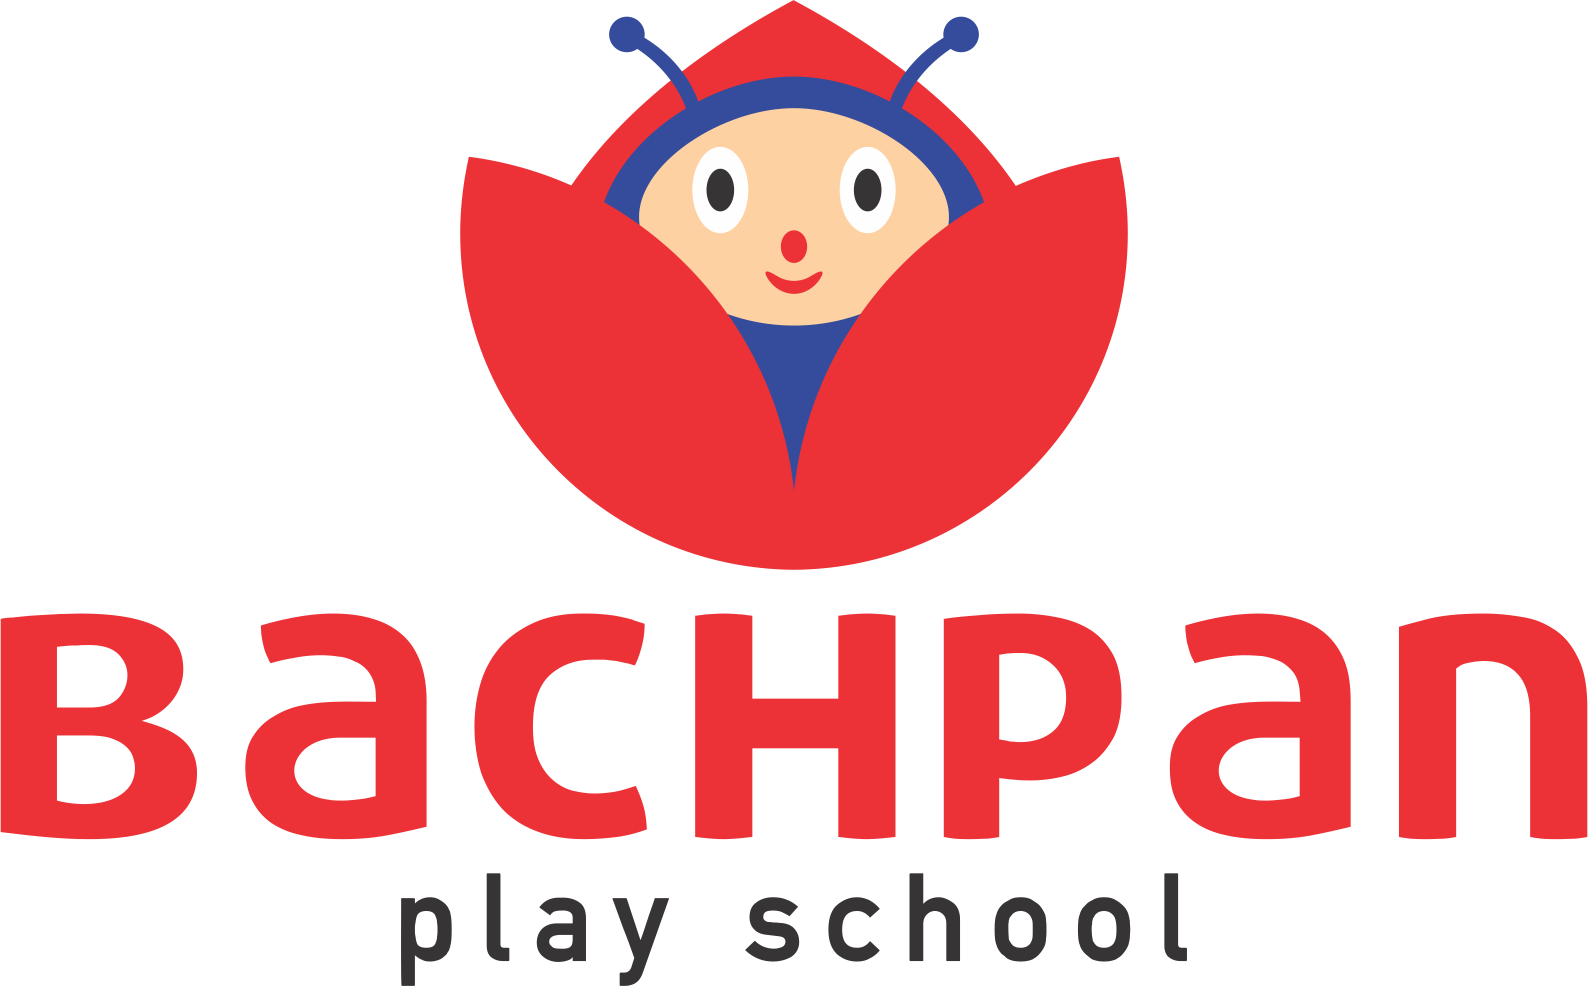 Bachpan A Play School|Schools|Education